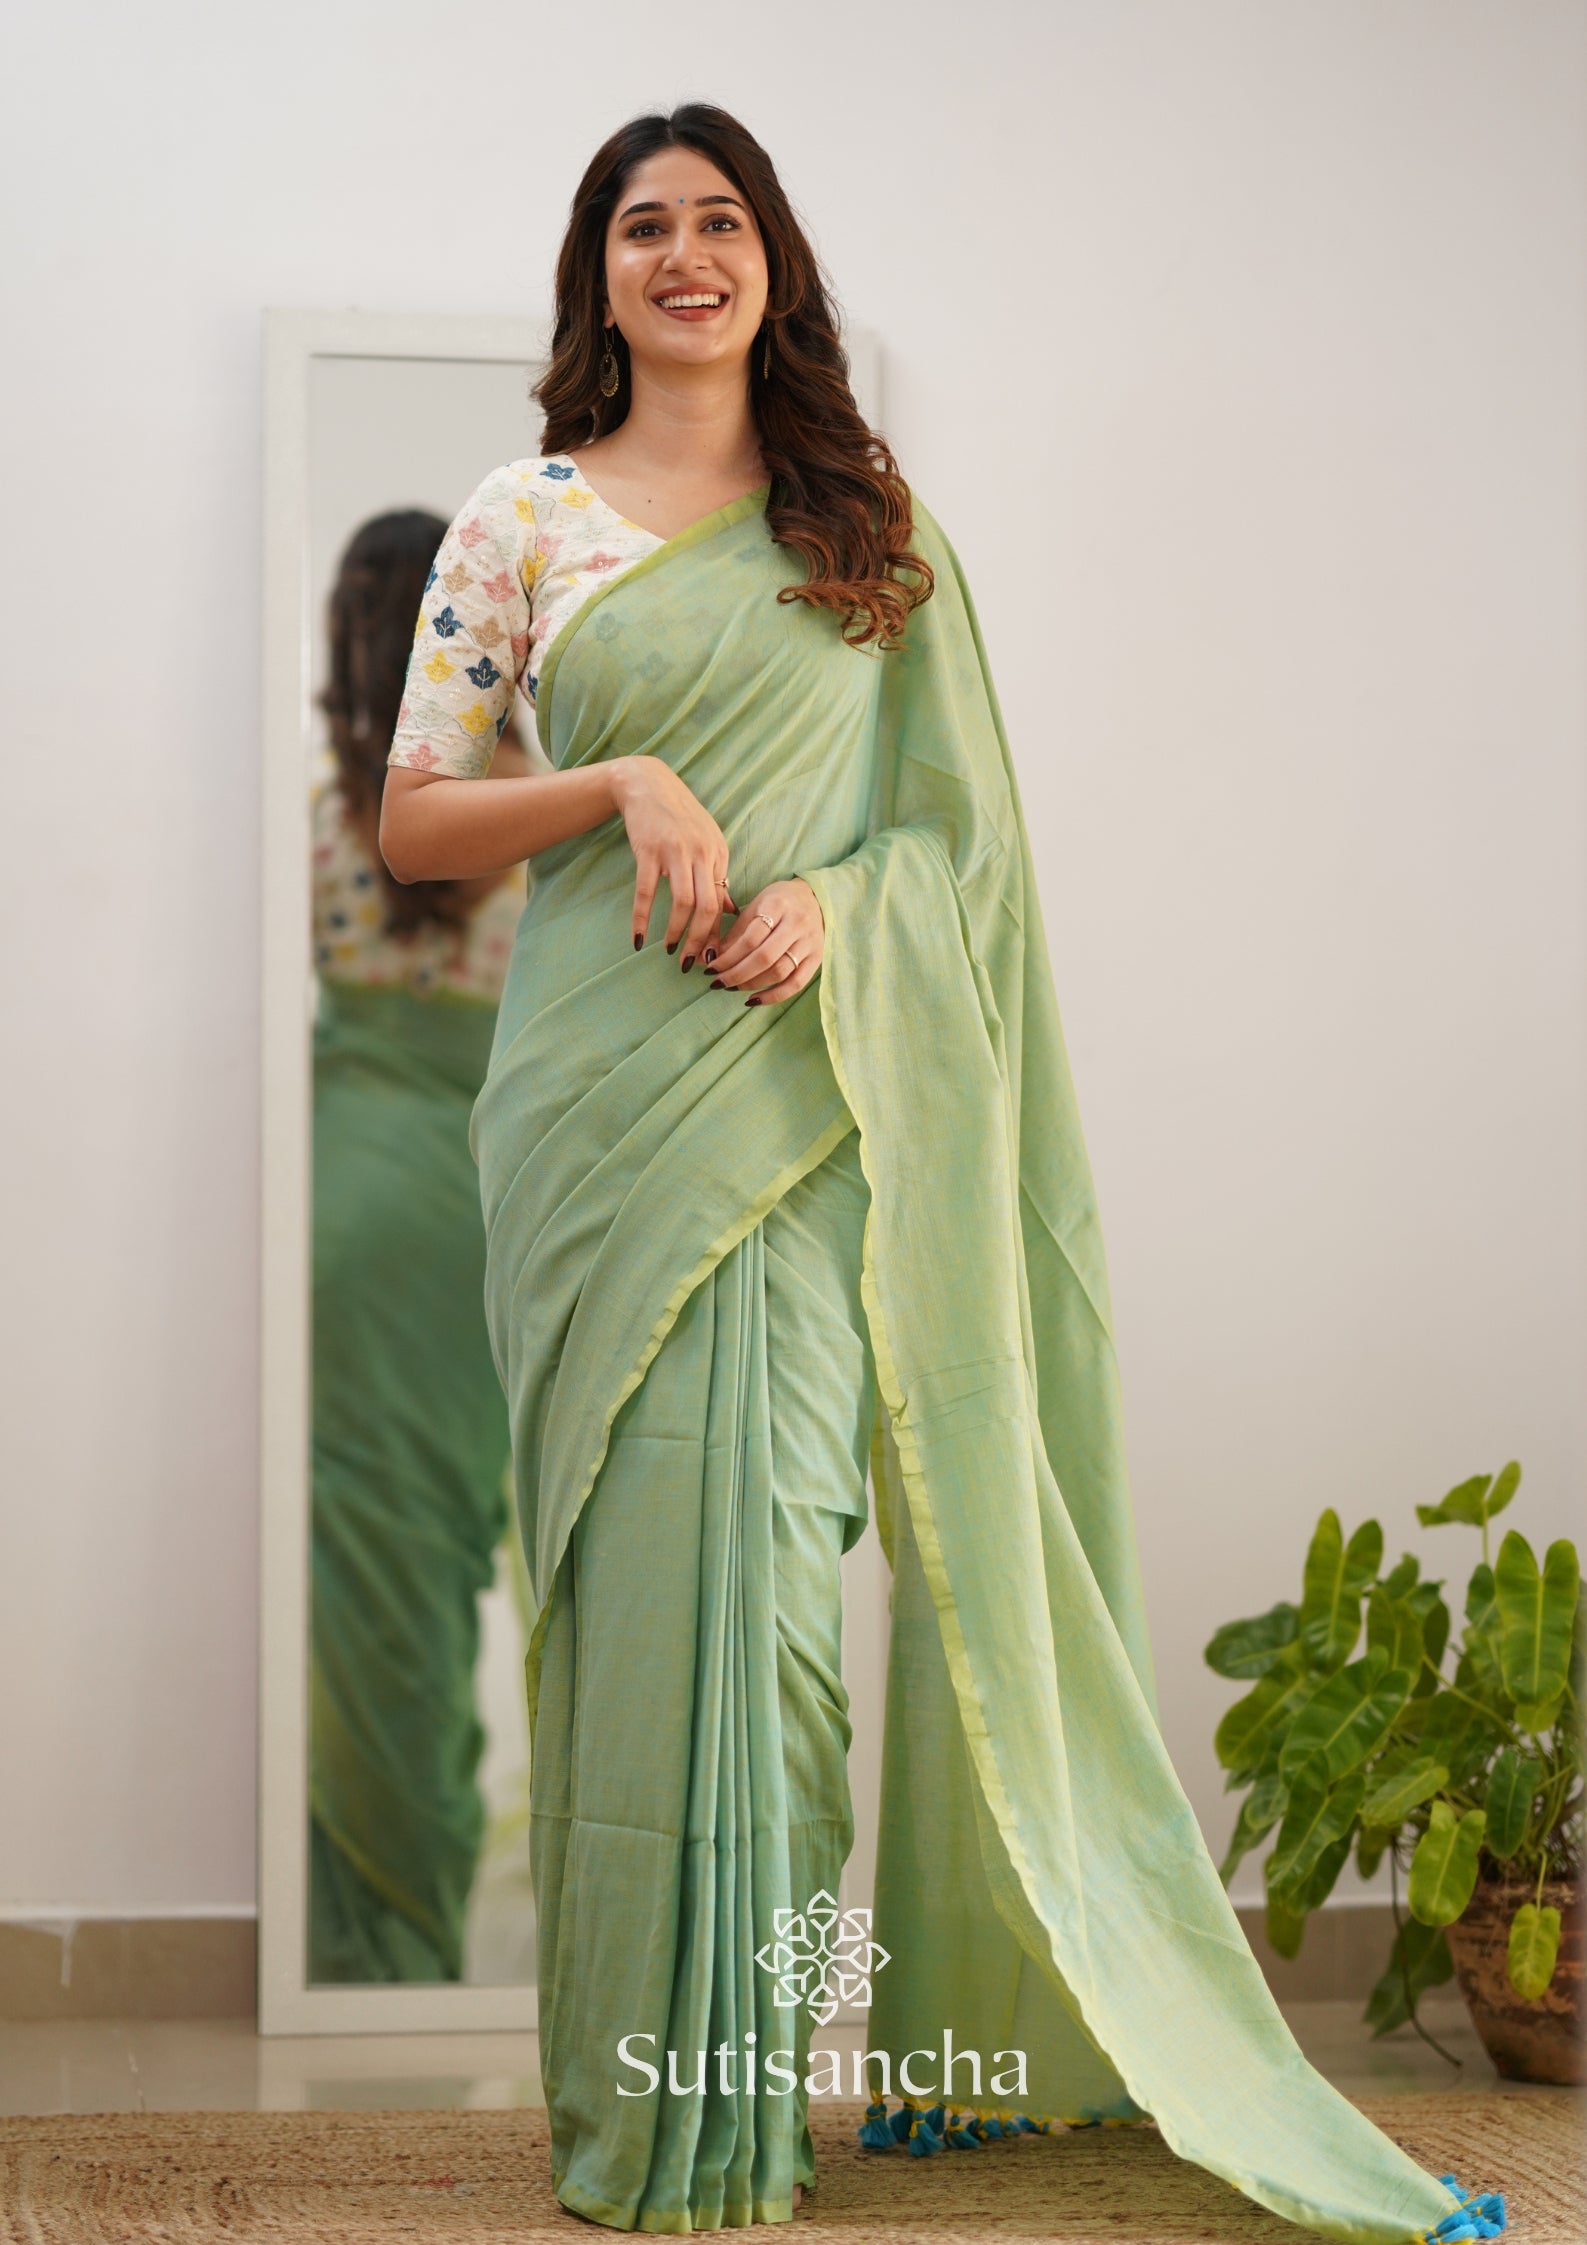 Sutisancha Pistachio Green Handloom Cotton Saree With Designer Blouse